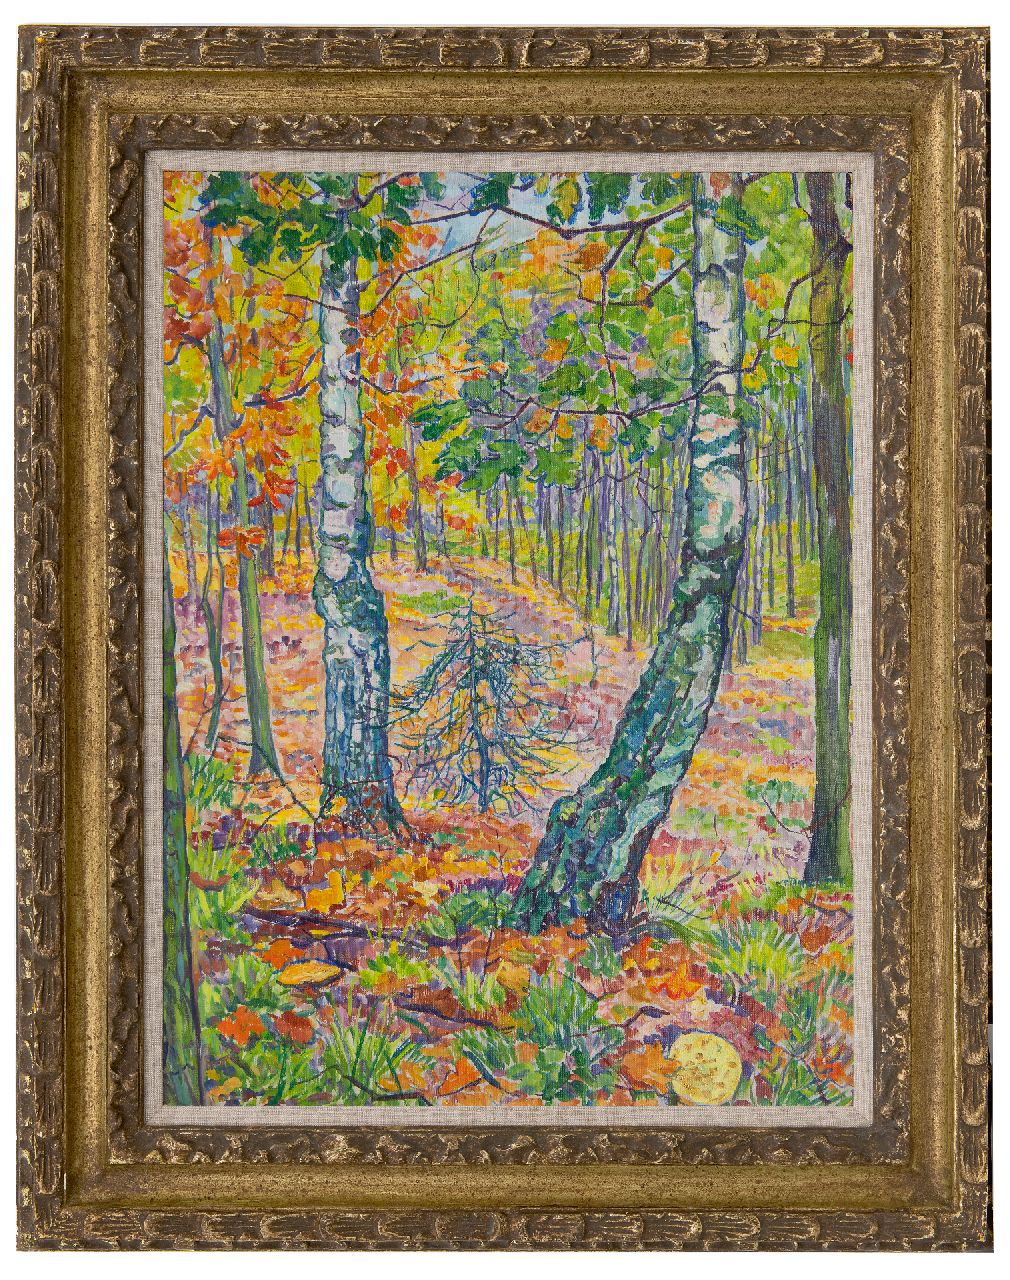 Pijpers E.E.  | 'Edith' Elizabeth Pijpers, Autumn forest, oil on canvas 60.2 x 45.3 cm